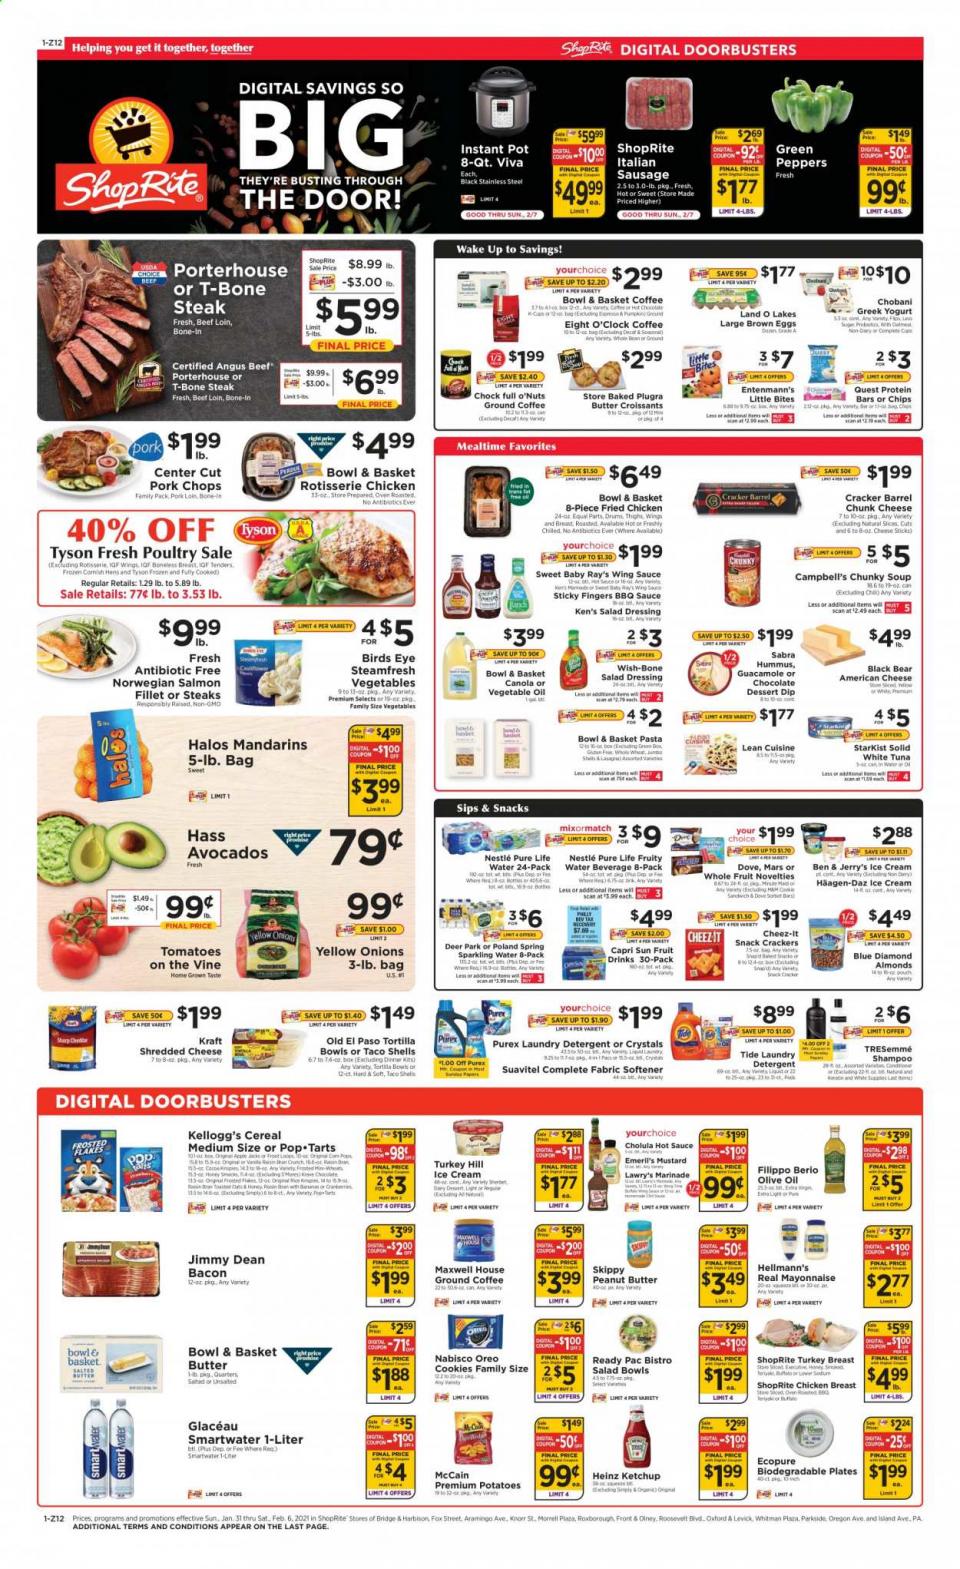 Shoprite Weekly Ad Jan 31 - Feb 6, 2021 - WeeklyAds2